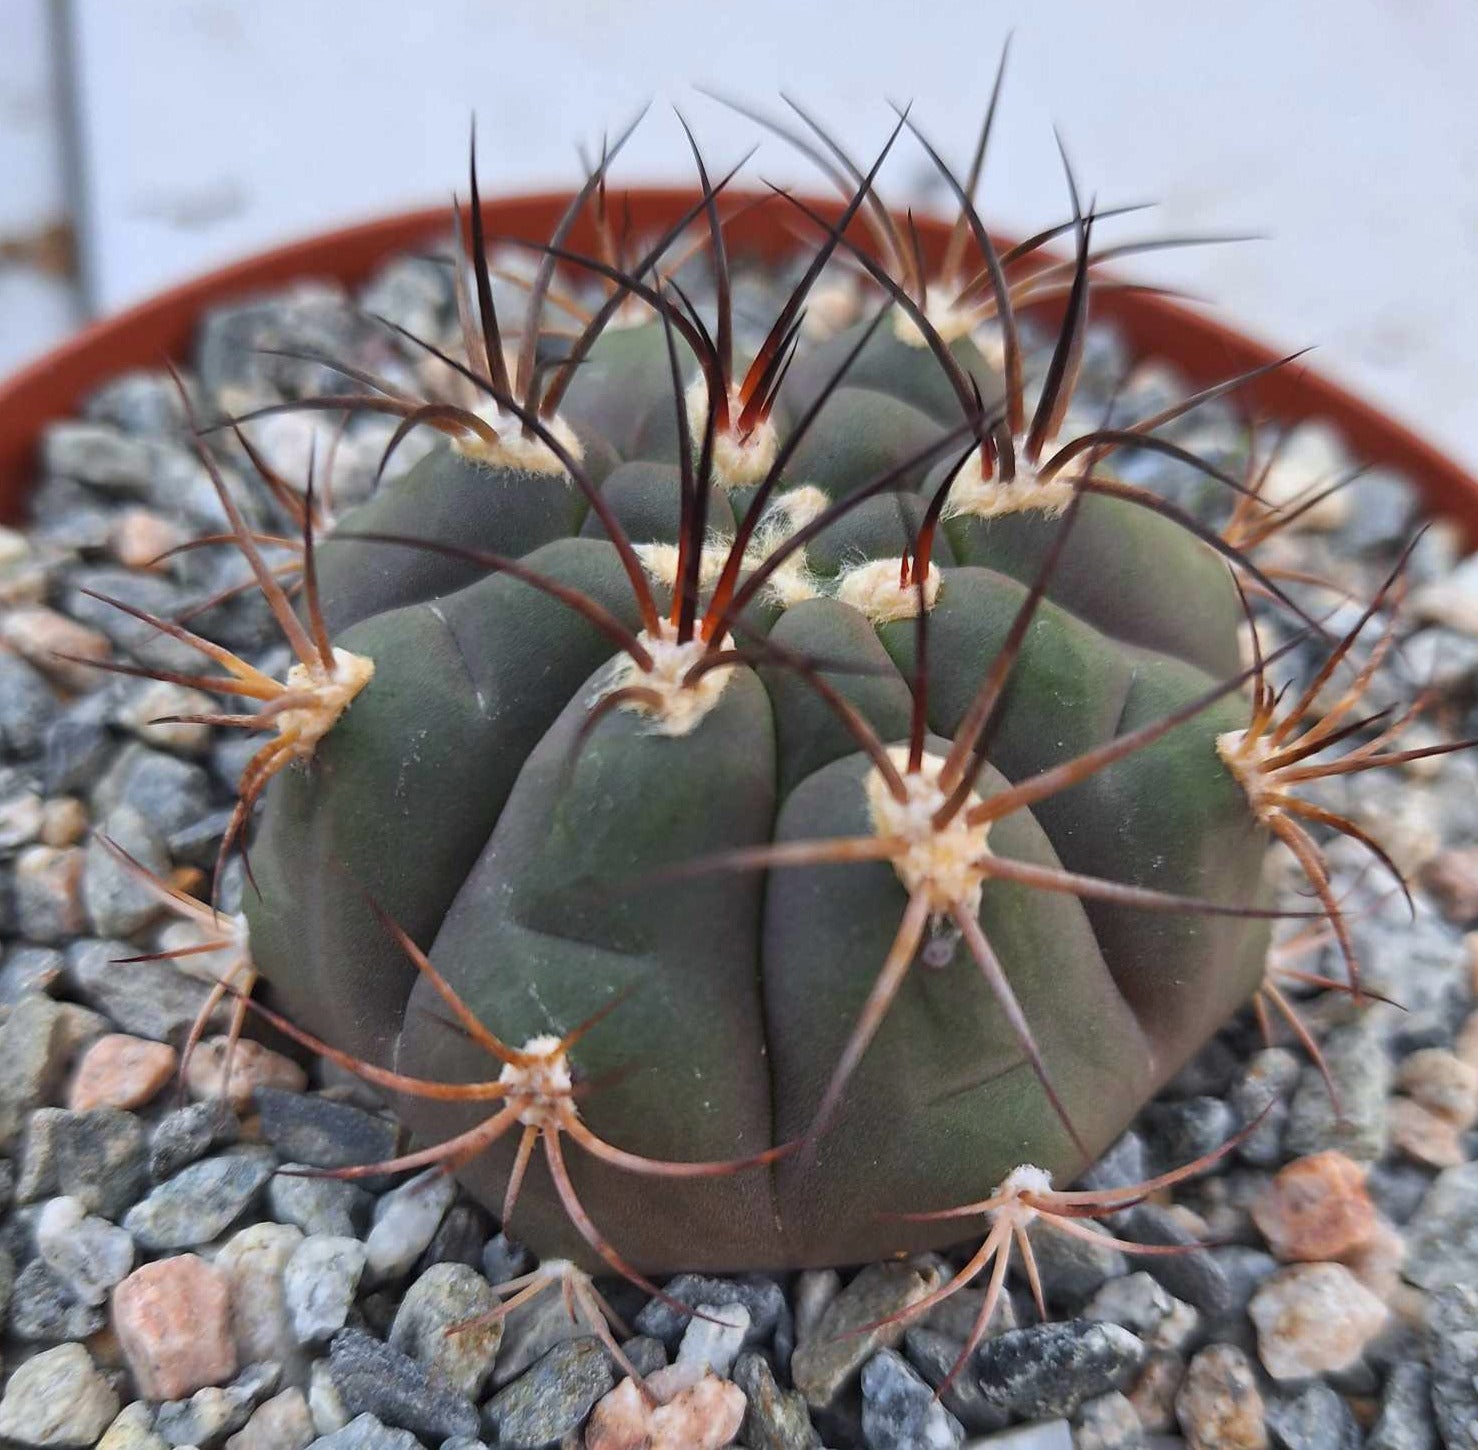 Gymnocalycium pflanzii v. albipulpa Live Cactus Growing in 6 Inch